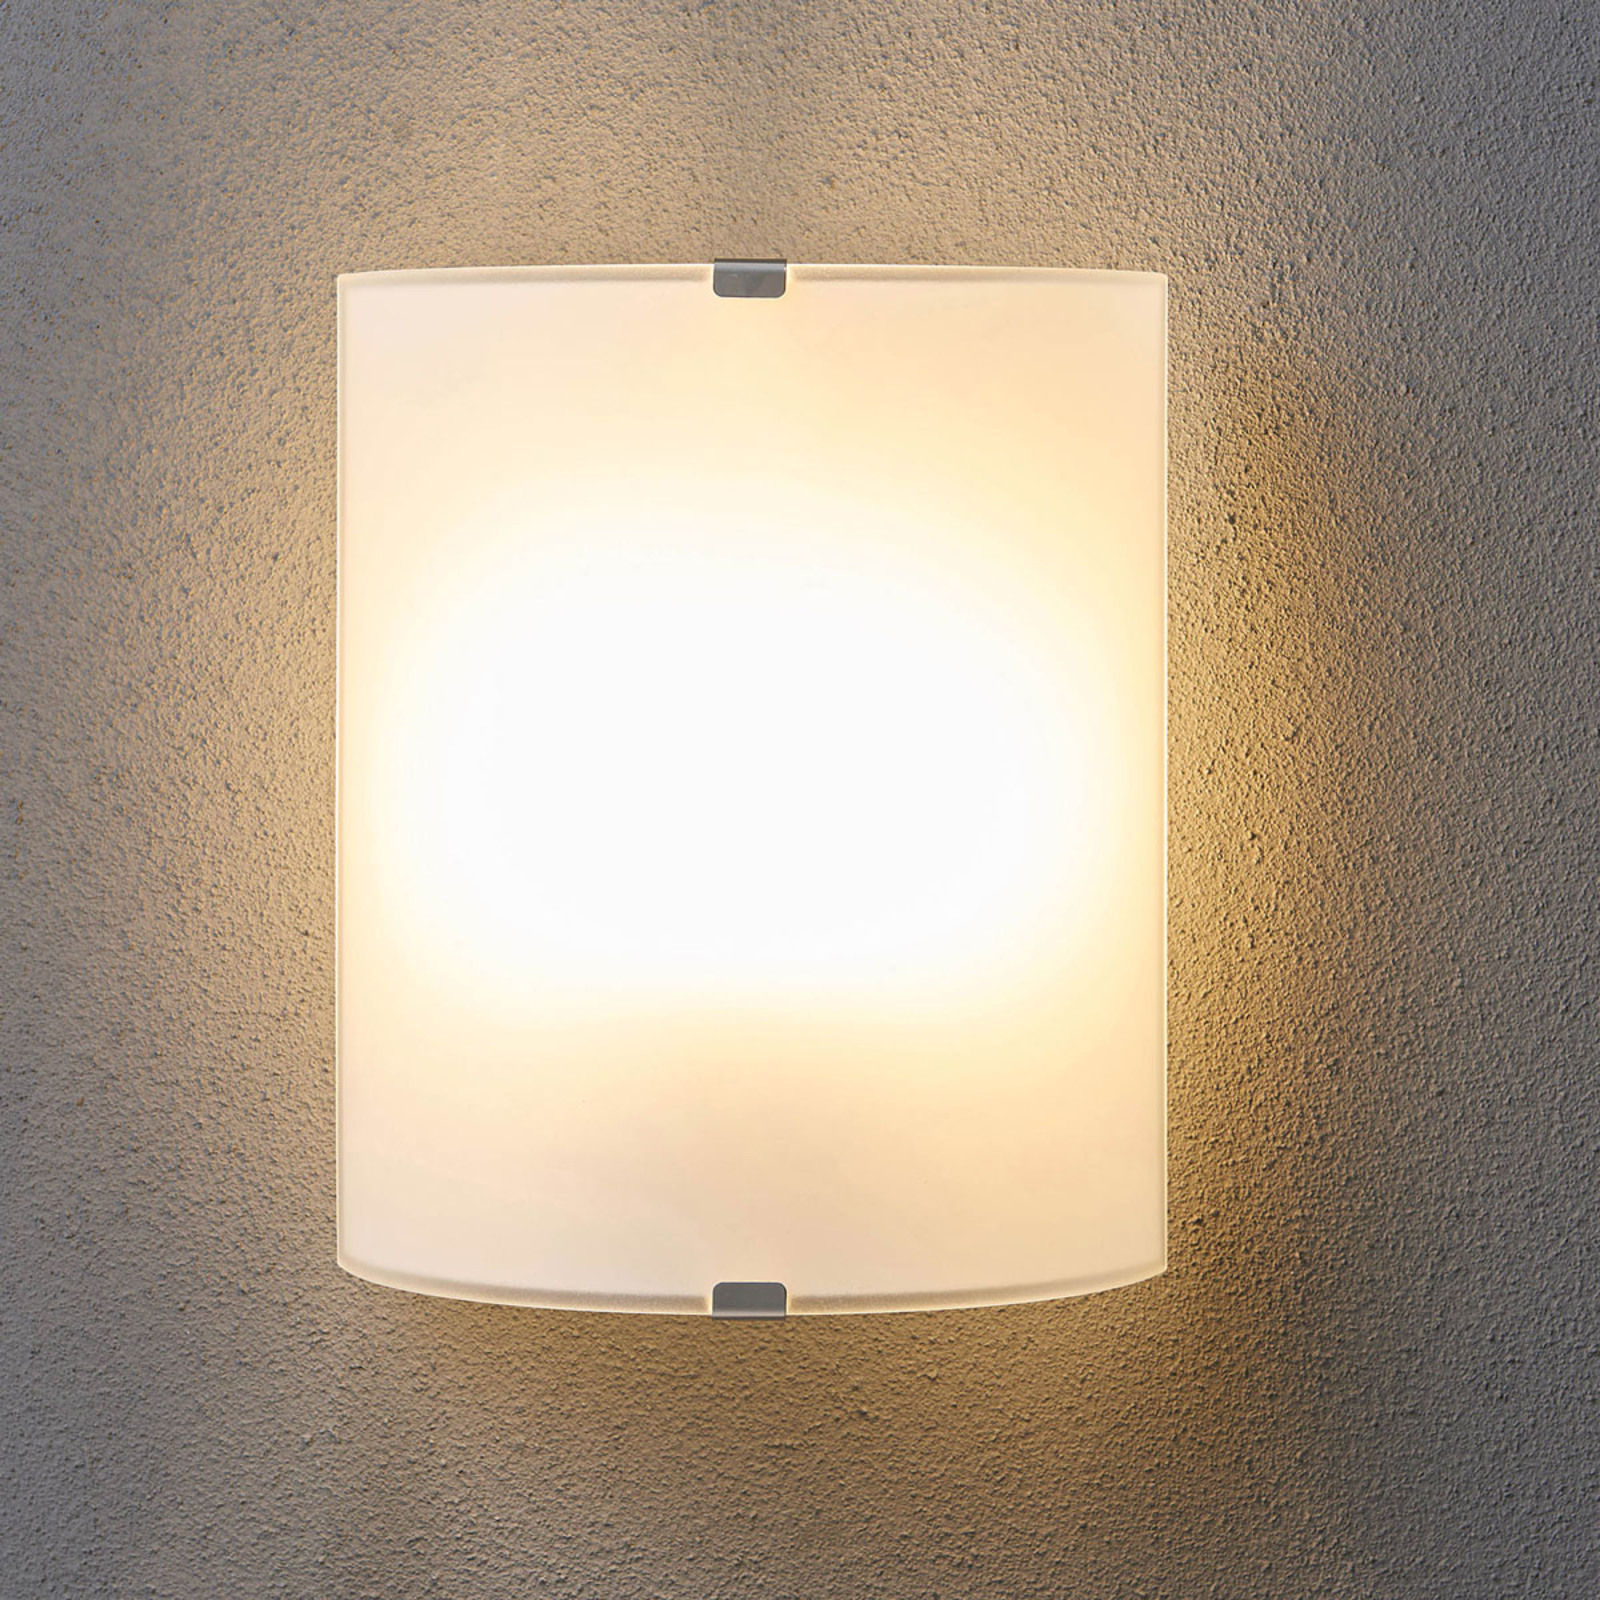 Phil glass wall light, set of 3